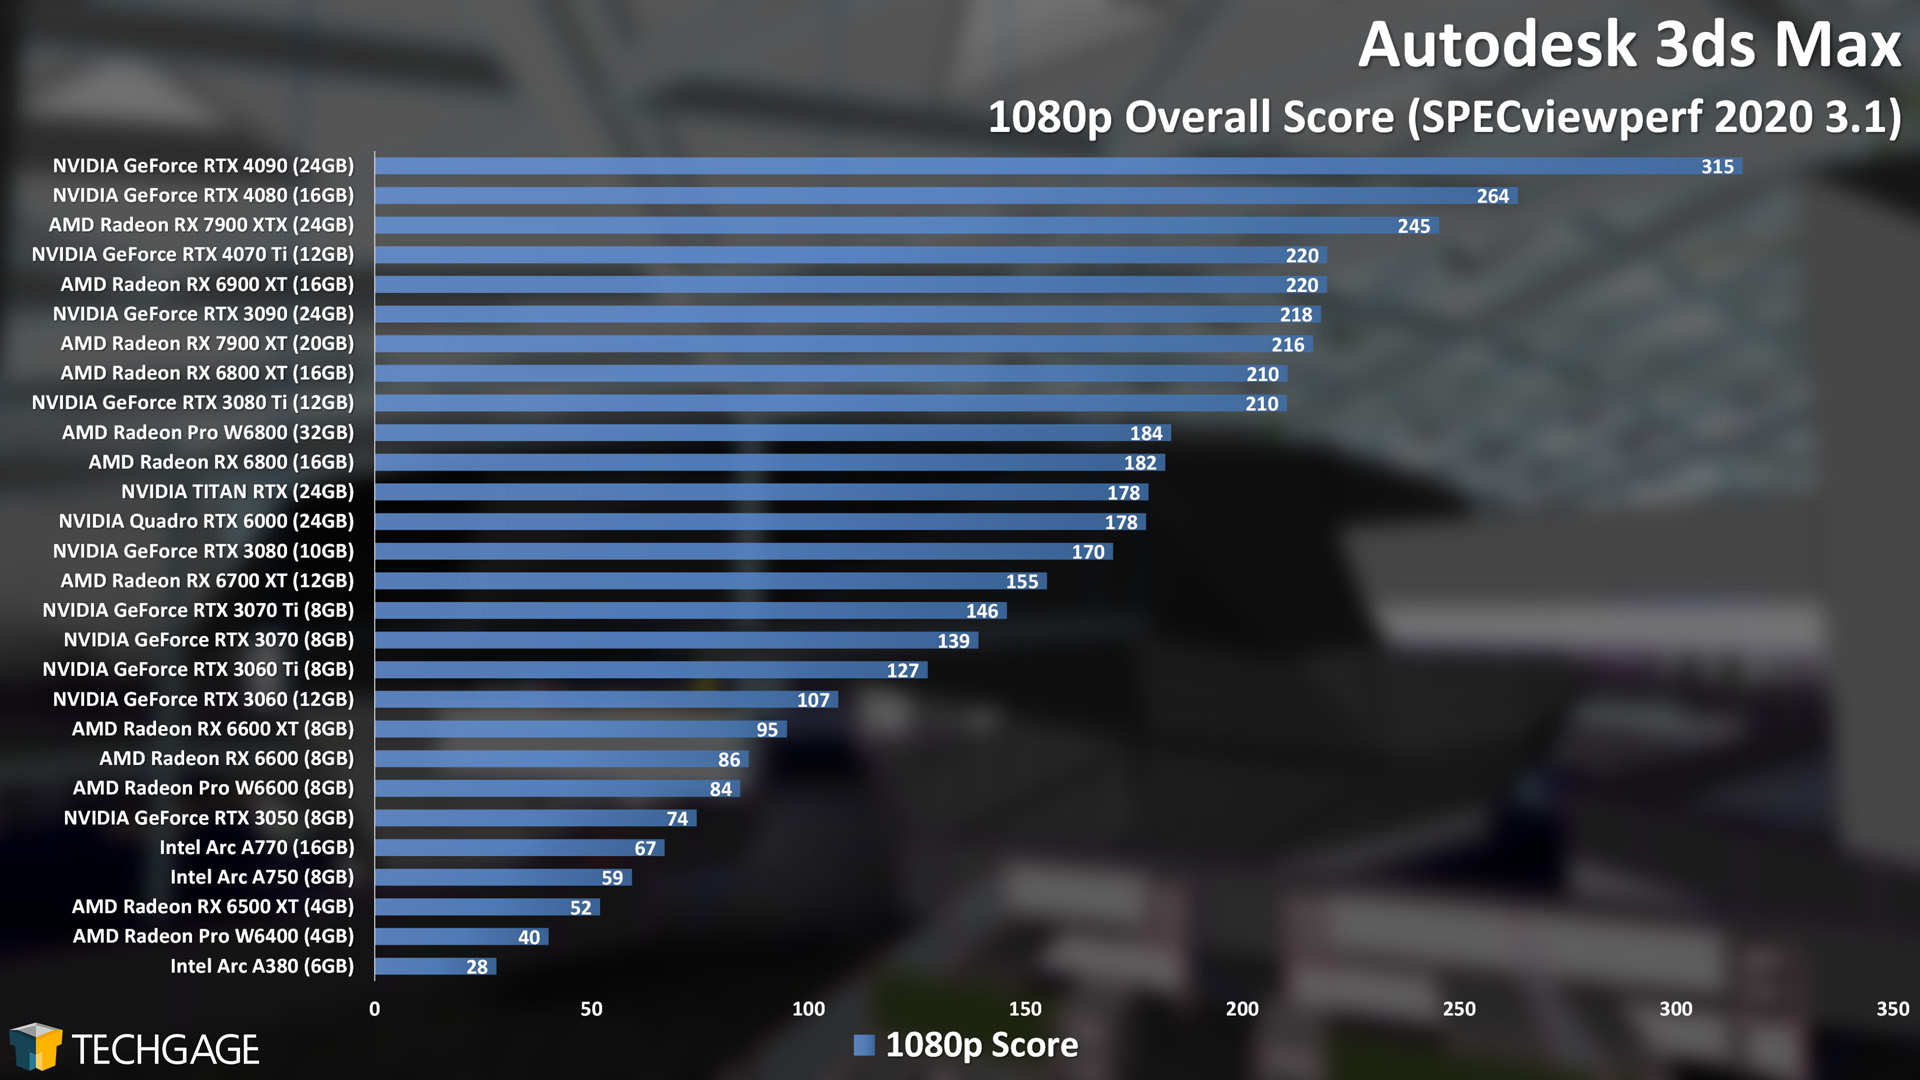 Autodesk 3ds Max - 1080p Viewport Performance